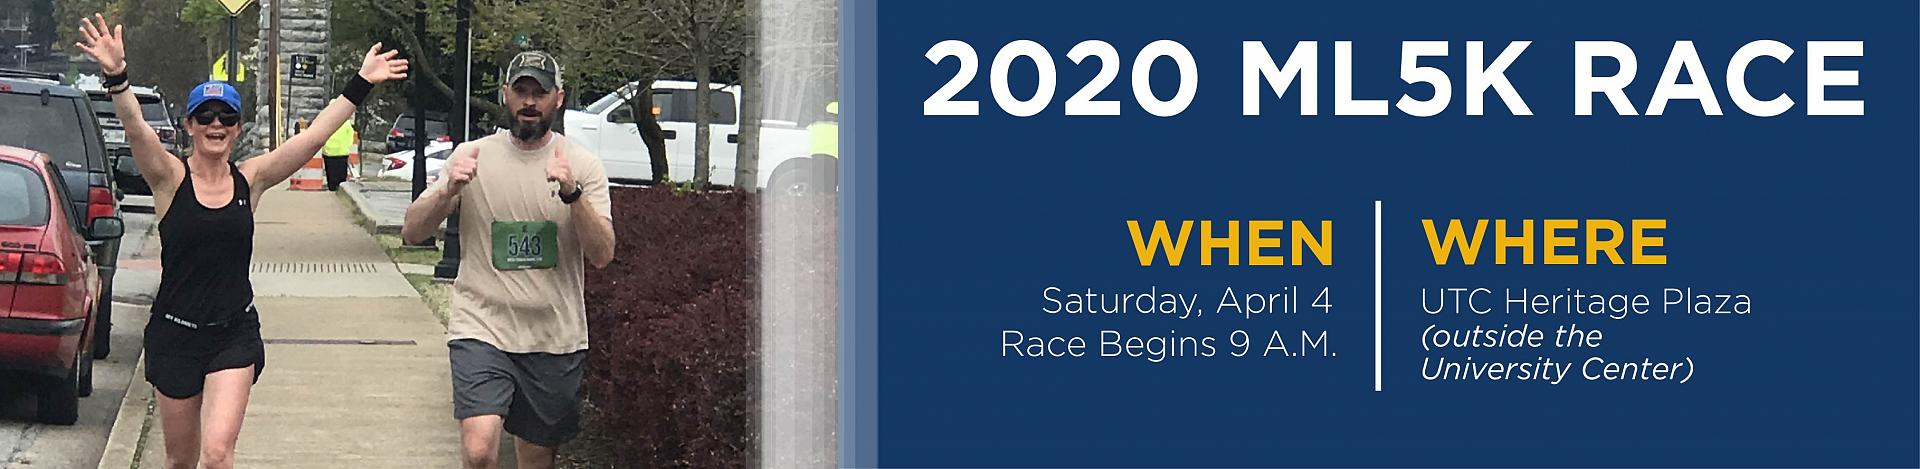 2020 MLK Race "Saturday April 4 9AM, UTC Heritage Plaza"